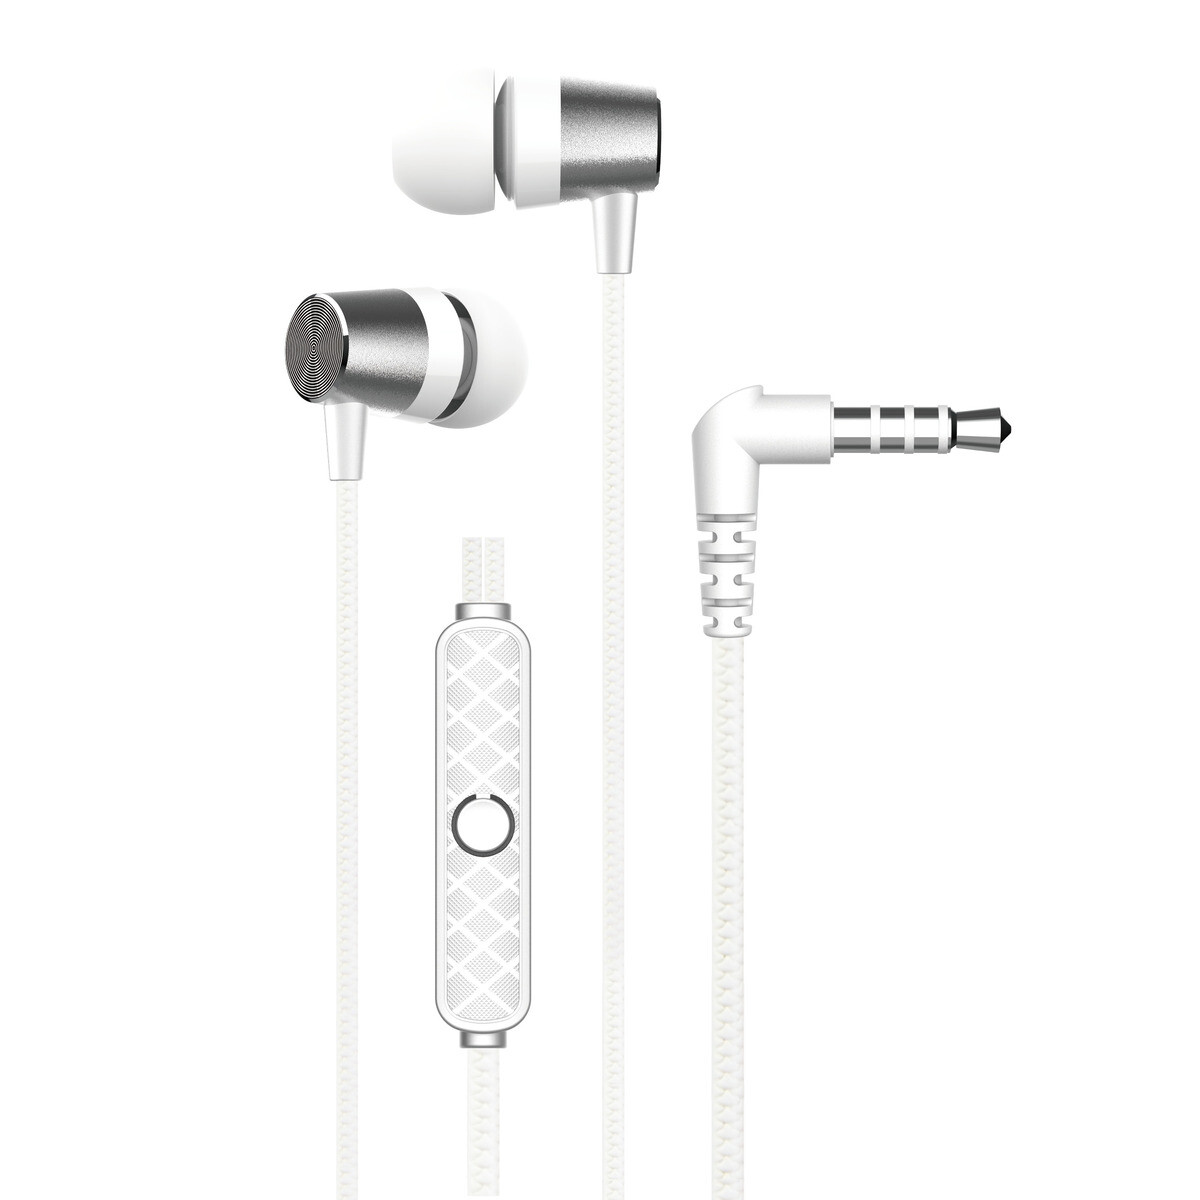 Devia metal earphone kintone seires 3.5mm - White 